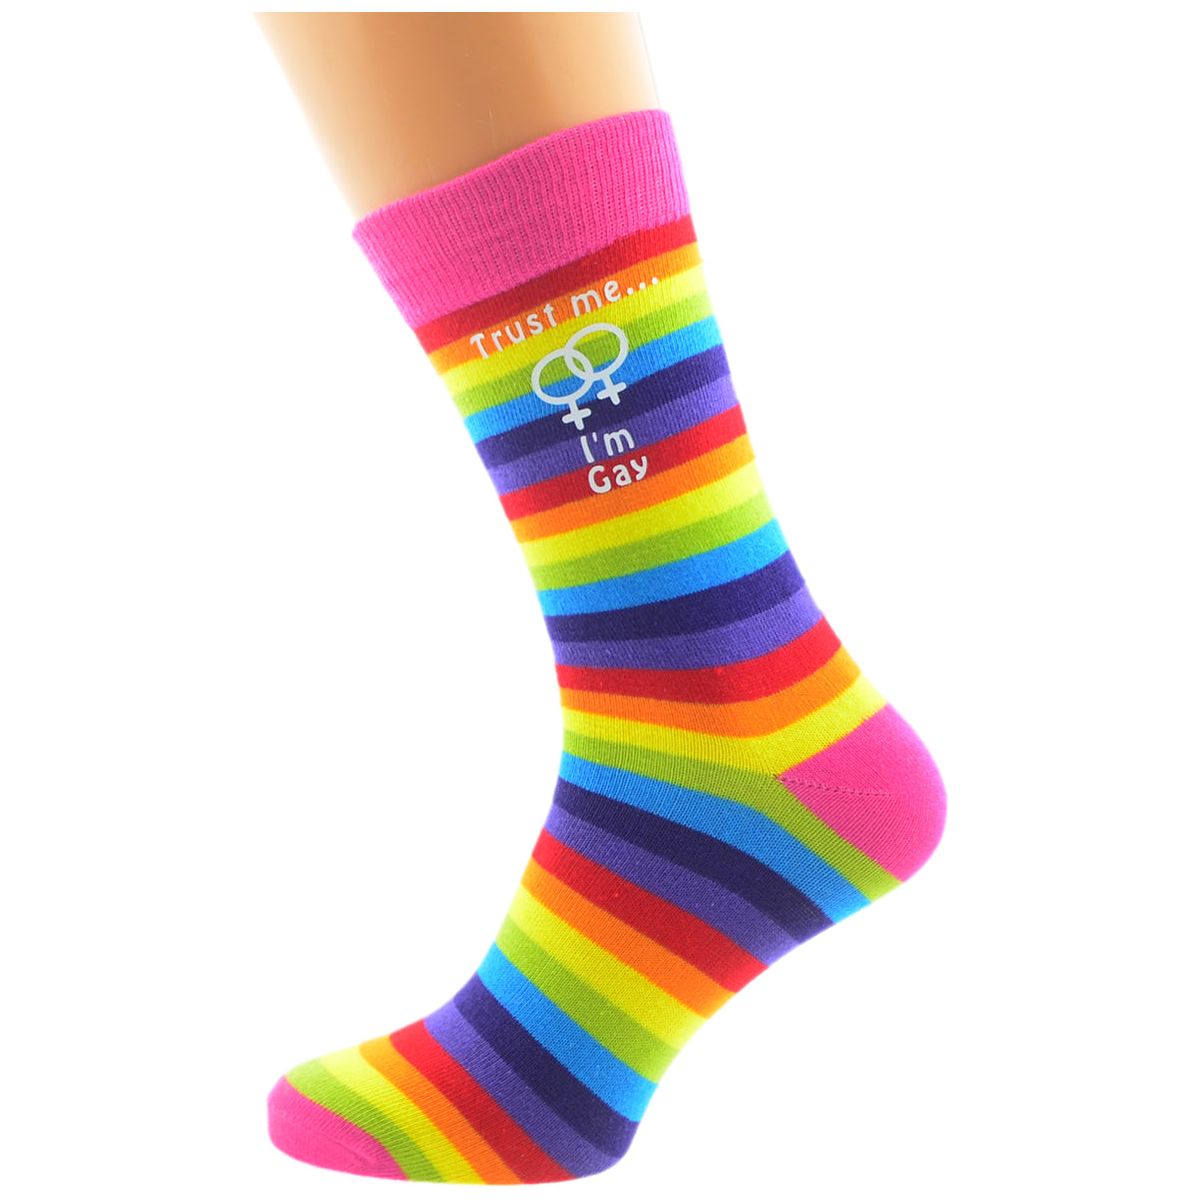 Trust me I'm Gay Female Sign Rainbow Socks - Ashton and Finch